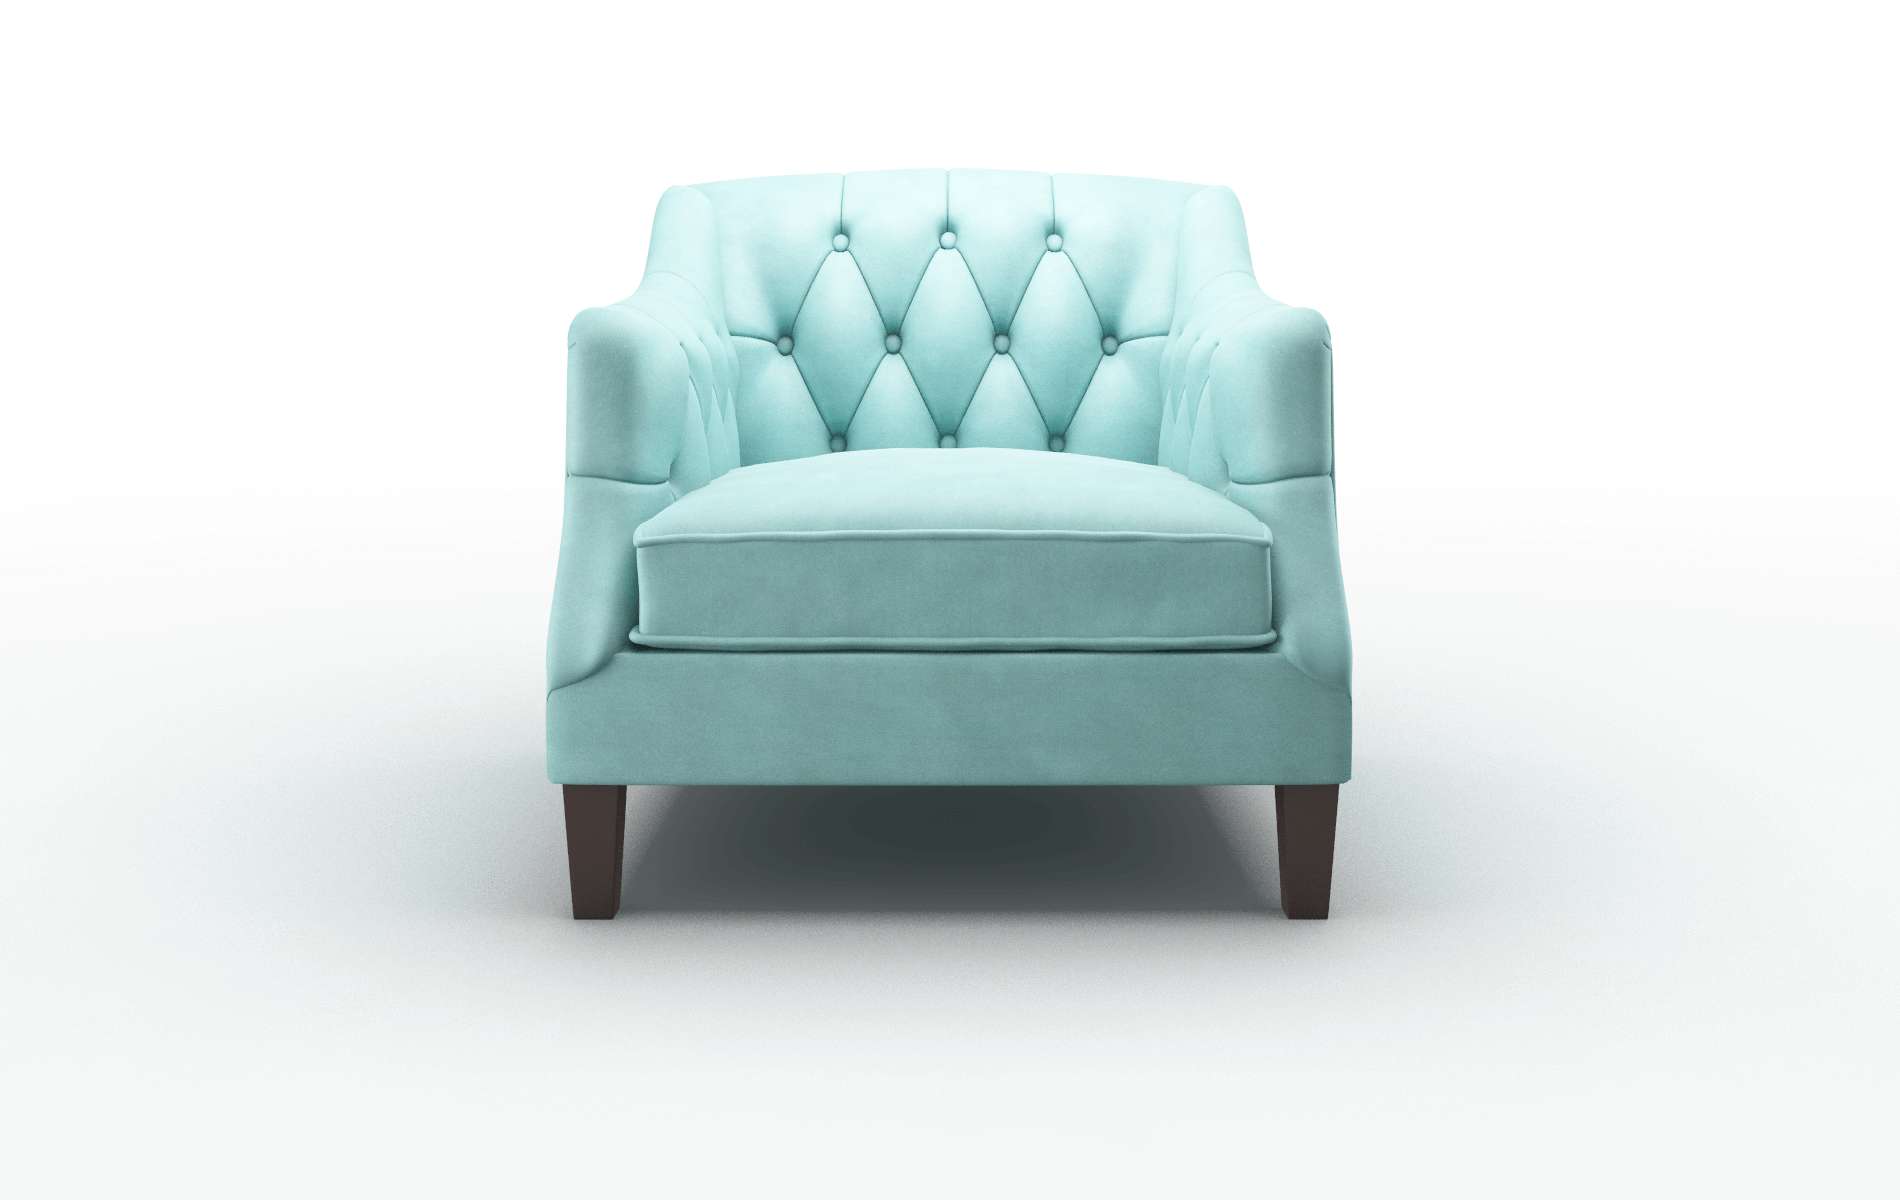 Shiraz Curious Turquoise Chair espresso legs 1